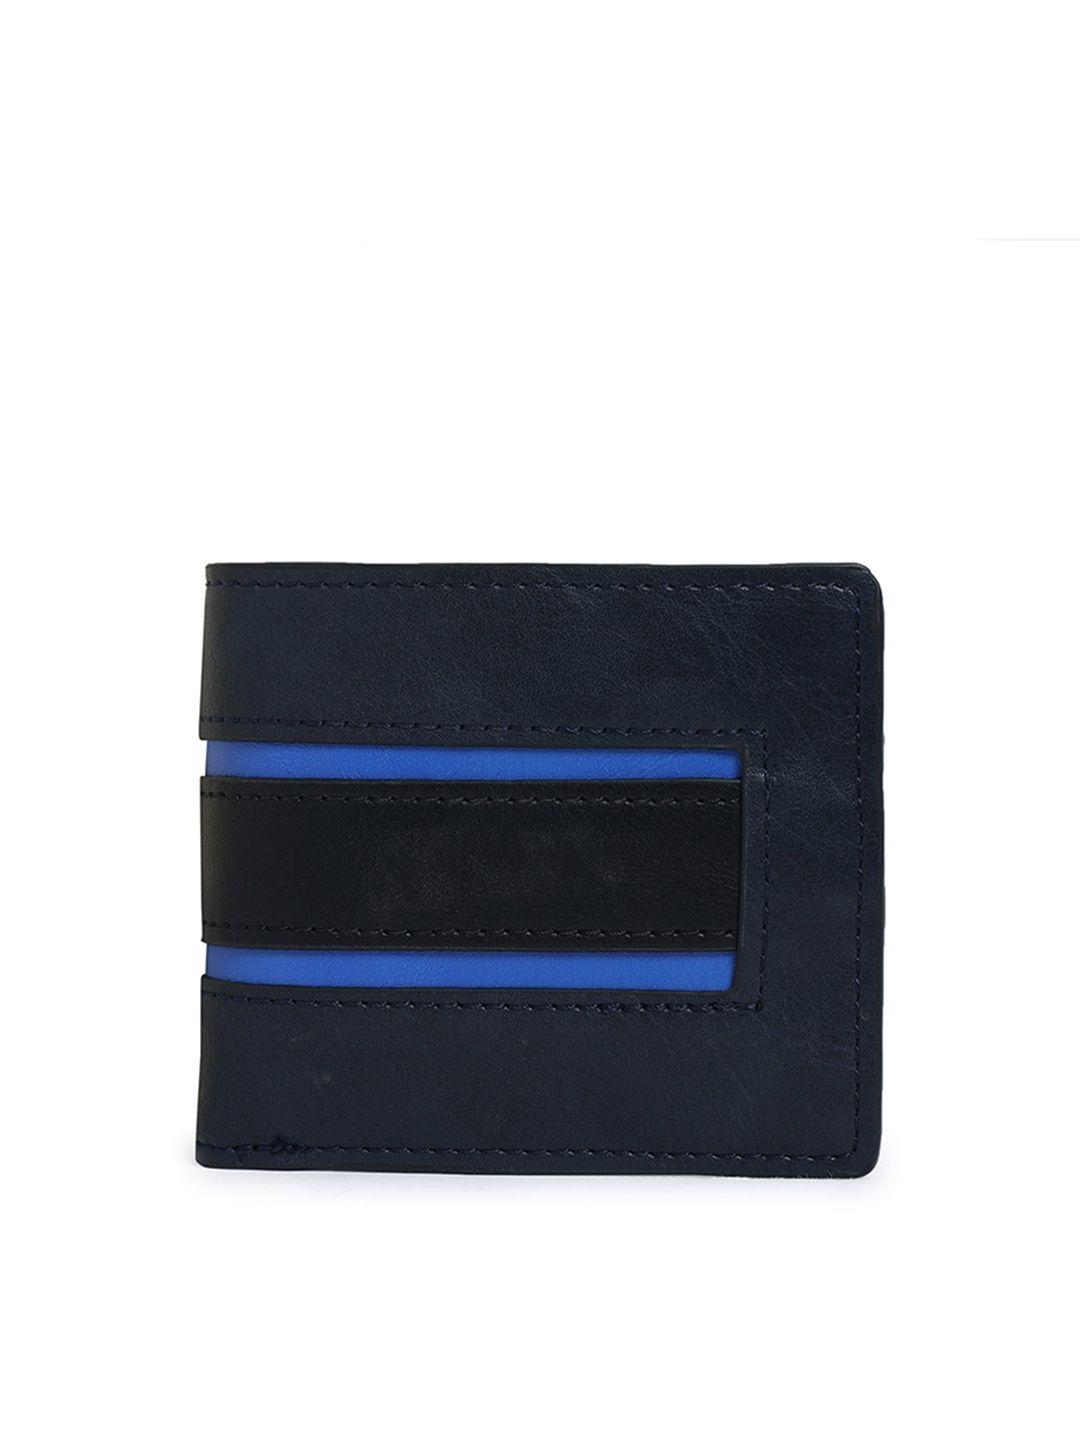 aldo-men-navy-blue-&-black-solid-two-fold-wallet